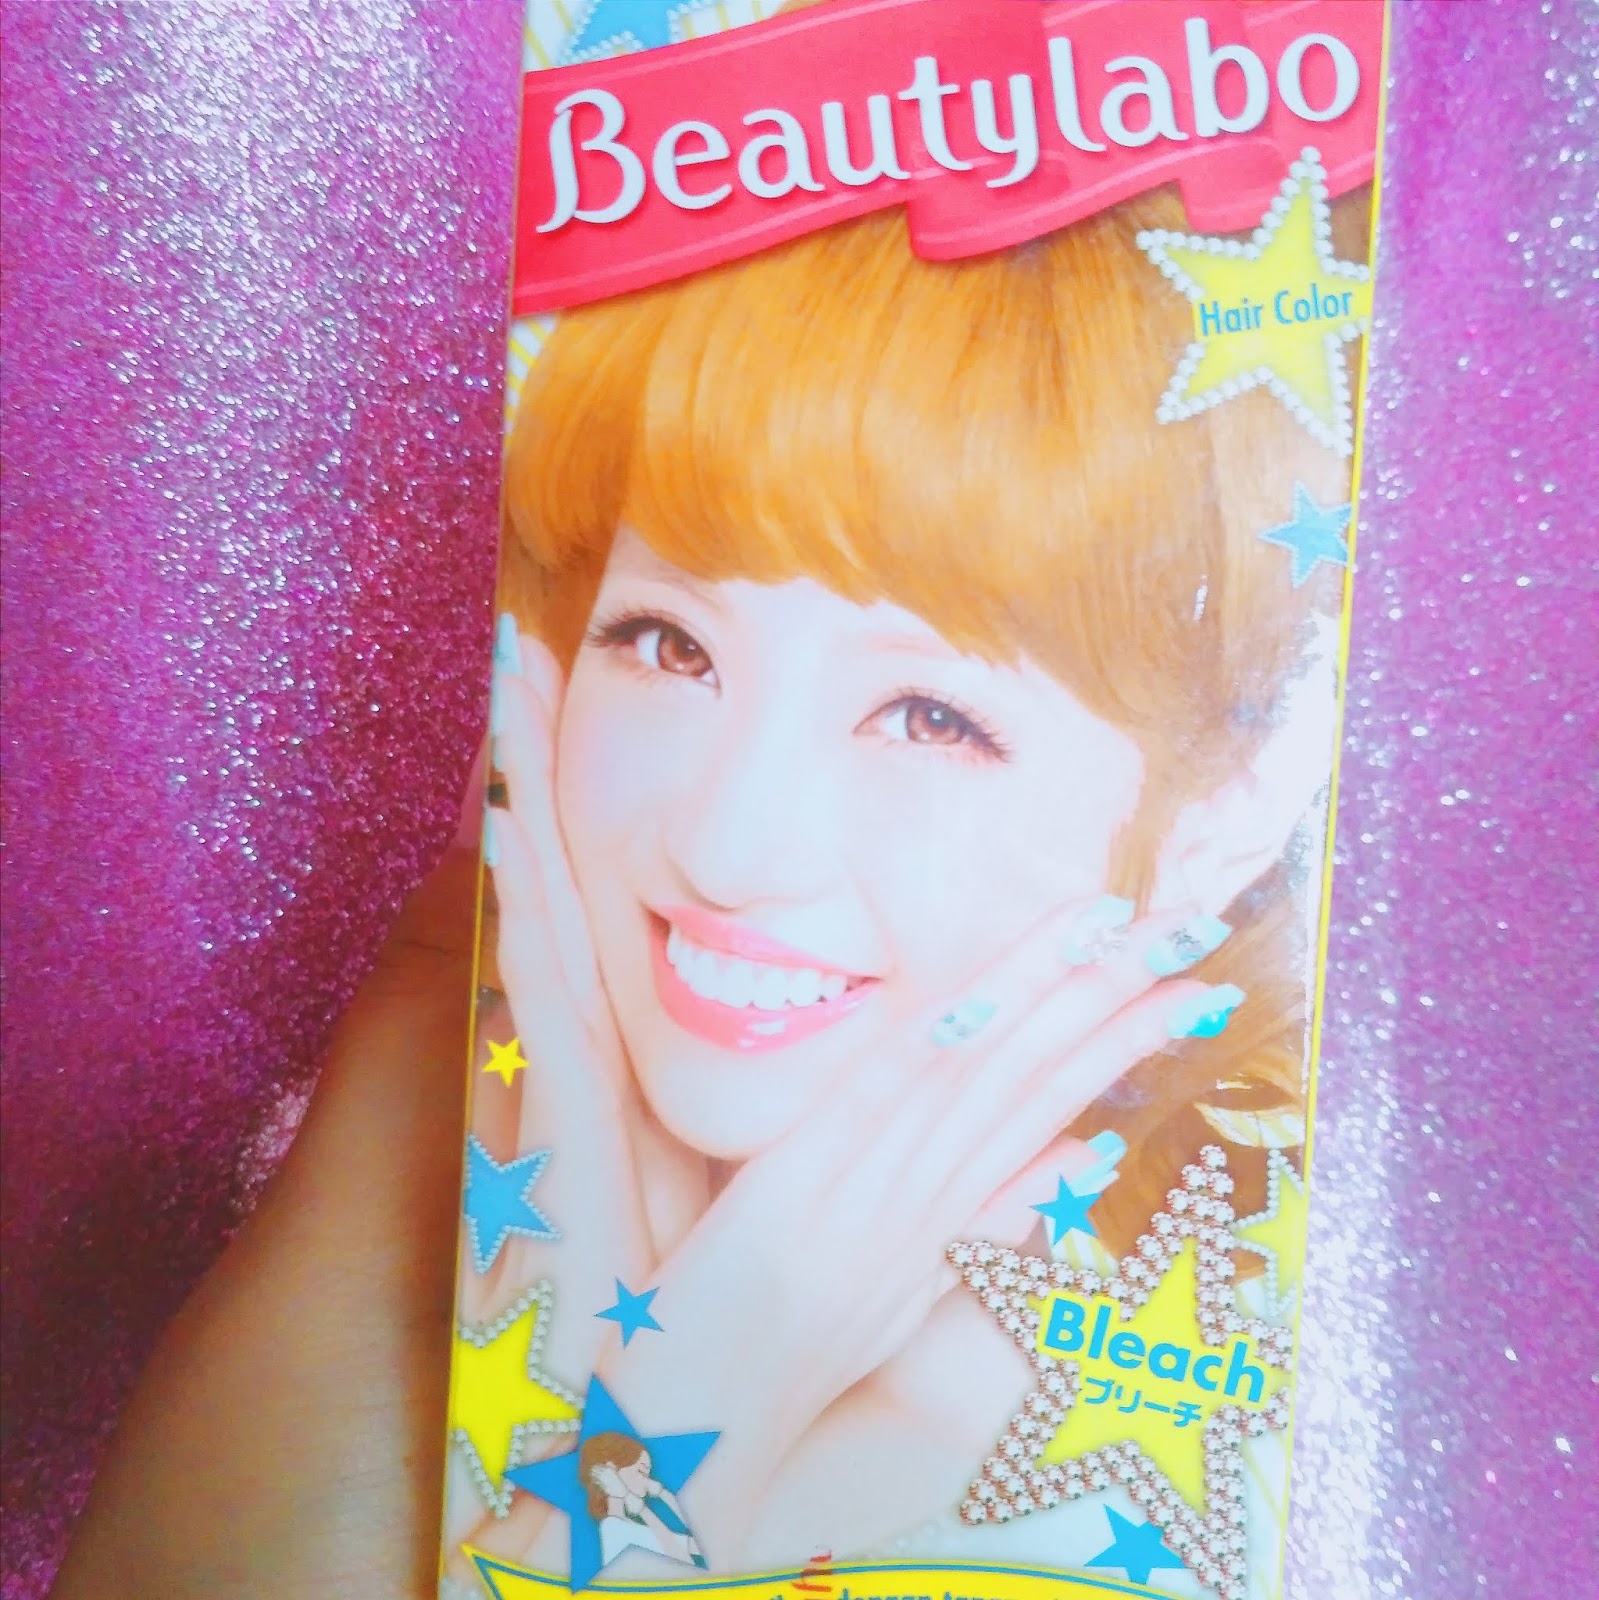 beautylabo bleach haircolor review